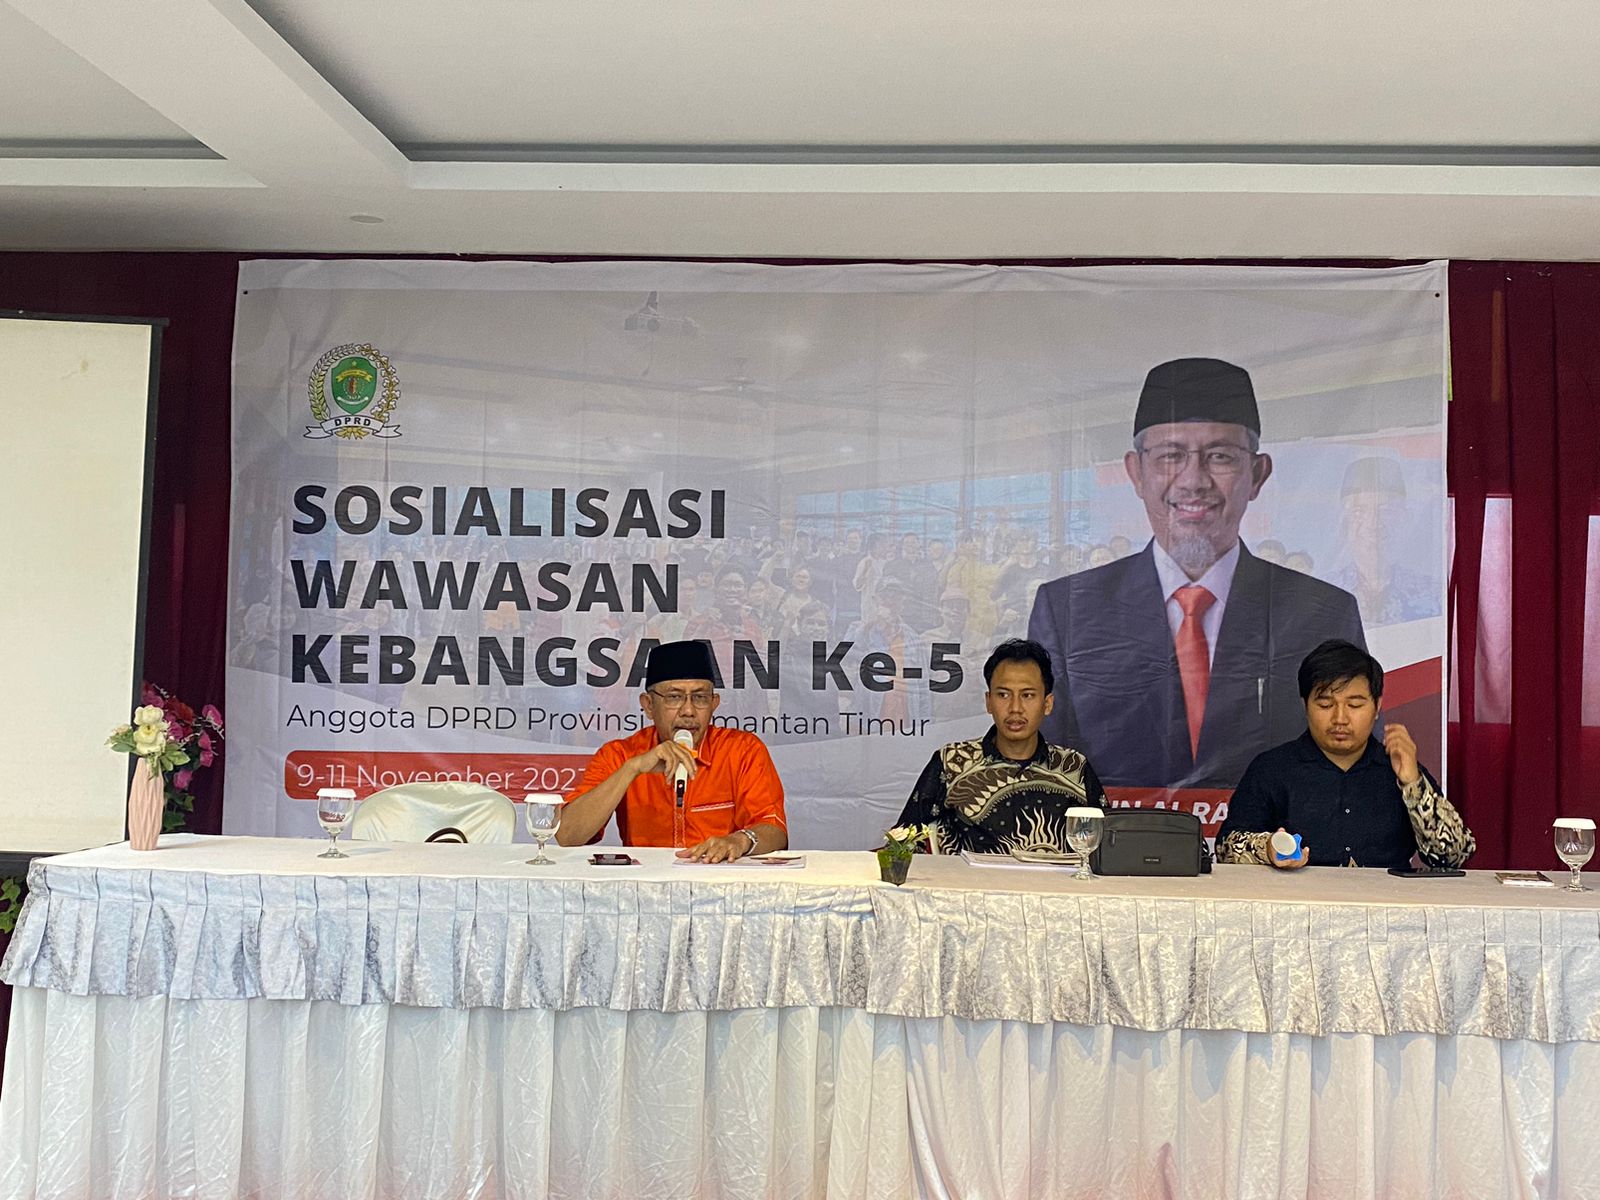 Anggota DPRD Kaltim Harun Al Rasyid, Sosialisasi Kebangsaan di Agrawangsa Mini, Ballroom and Convention Center, Sangatta Utara, Kutai Timur.